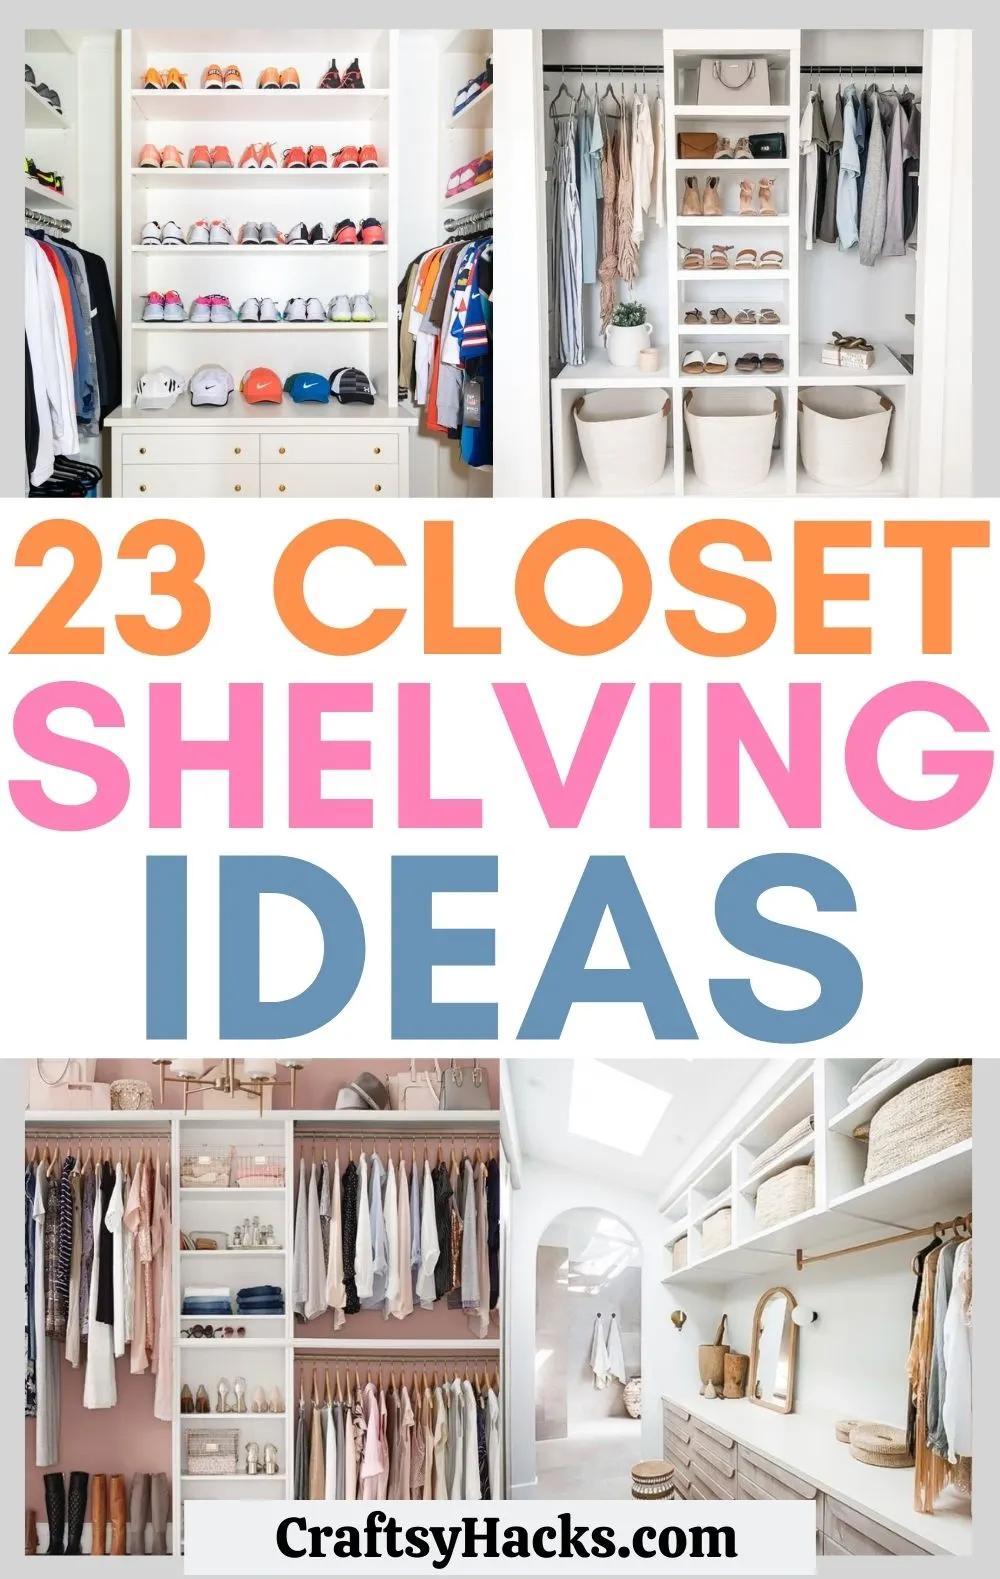 https://craftsyhacks.com/wp-content/uploads/2021/04/23-closet-shelving-ideas-1.jpg.webp